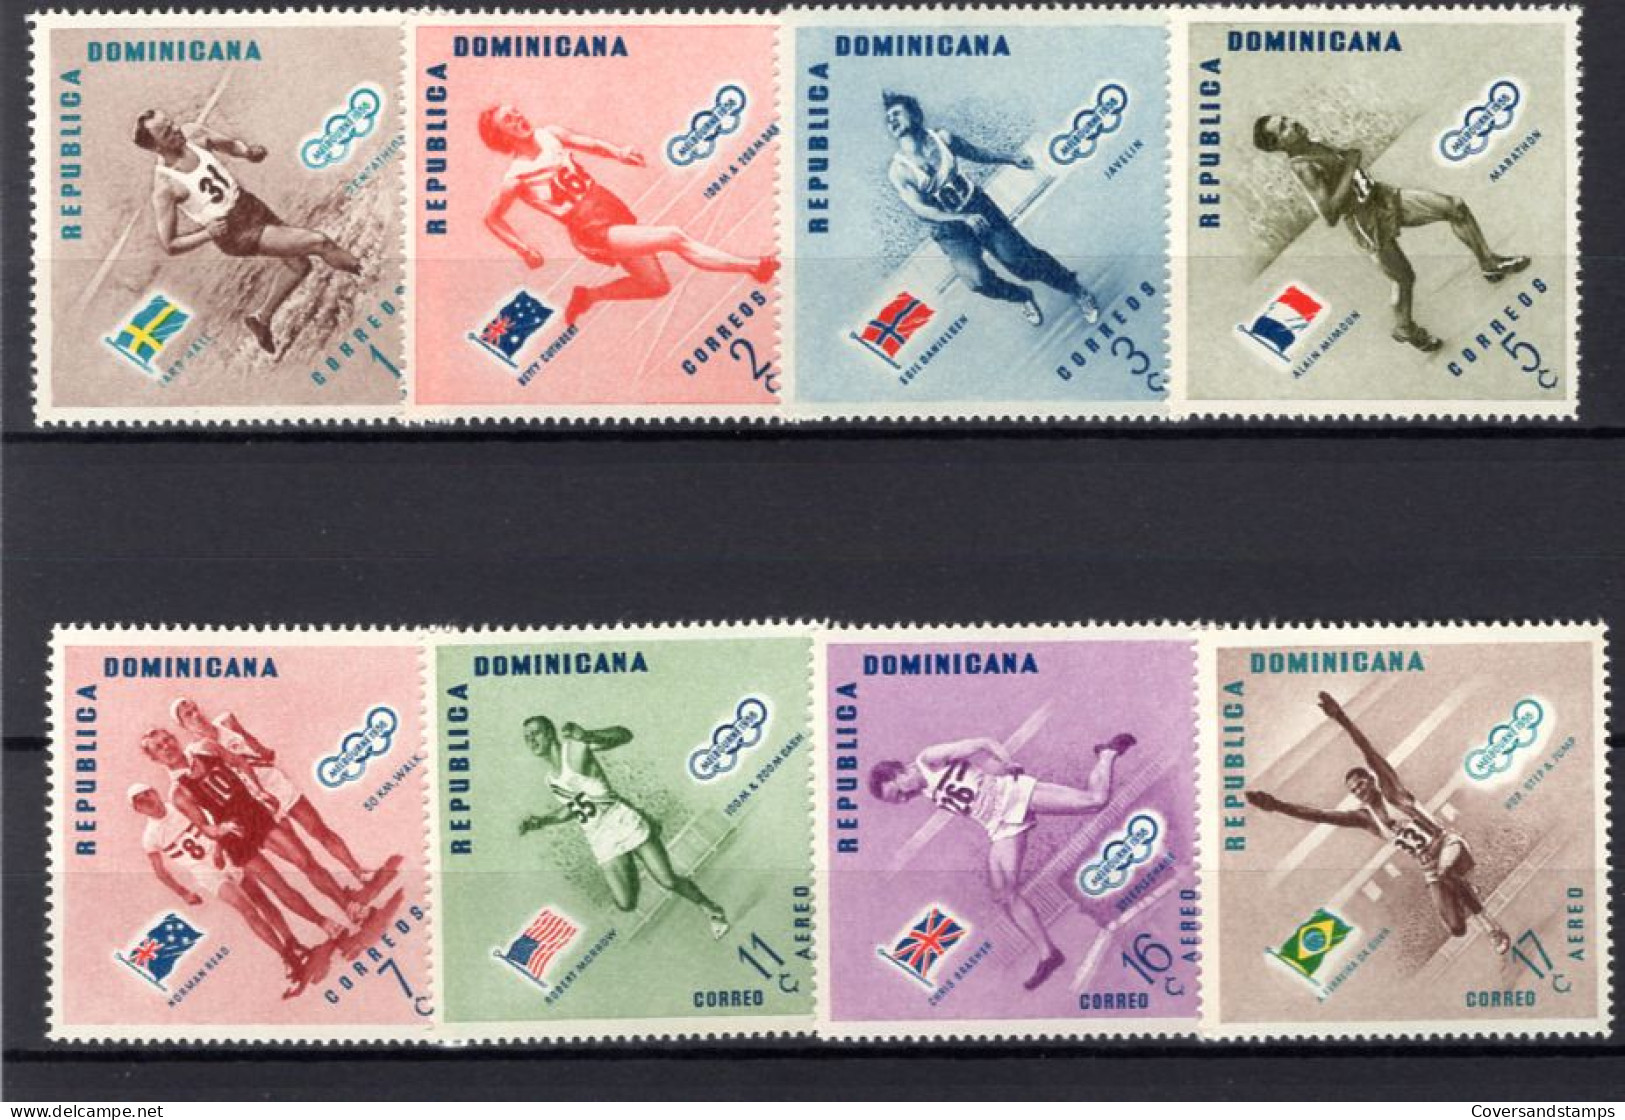  Republica Dominicana - Melbourne 1956 - Summer 1956: Melbourne